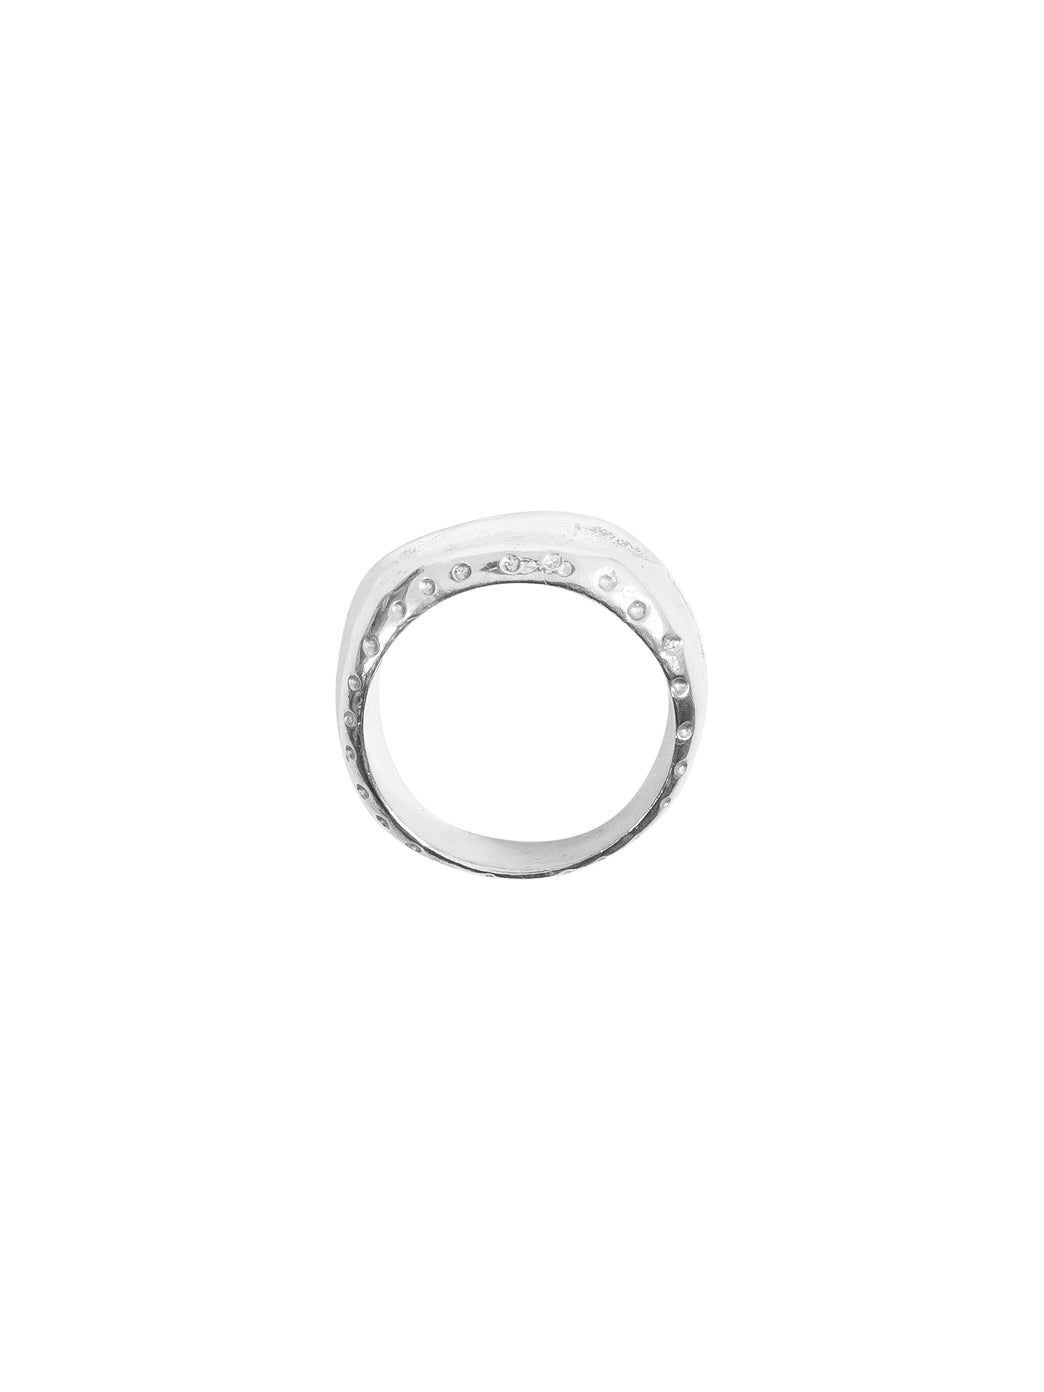 Fiorina Jewellery Men's Roman Numeral Ring Side View